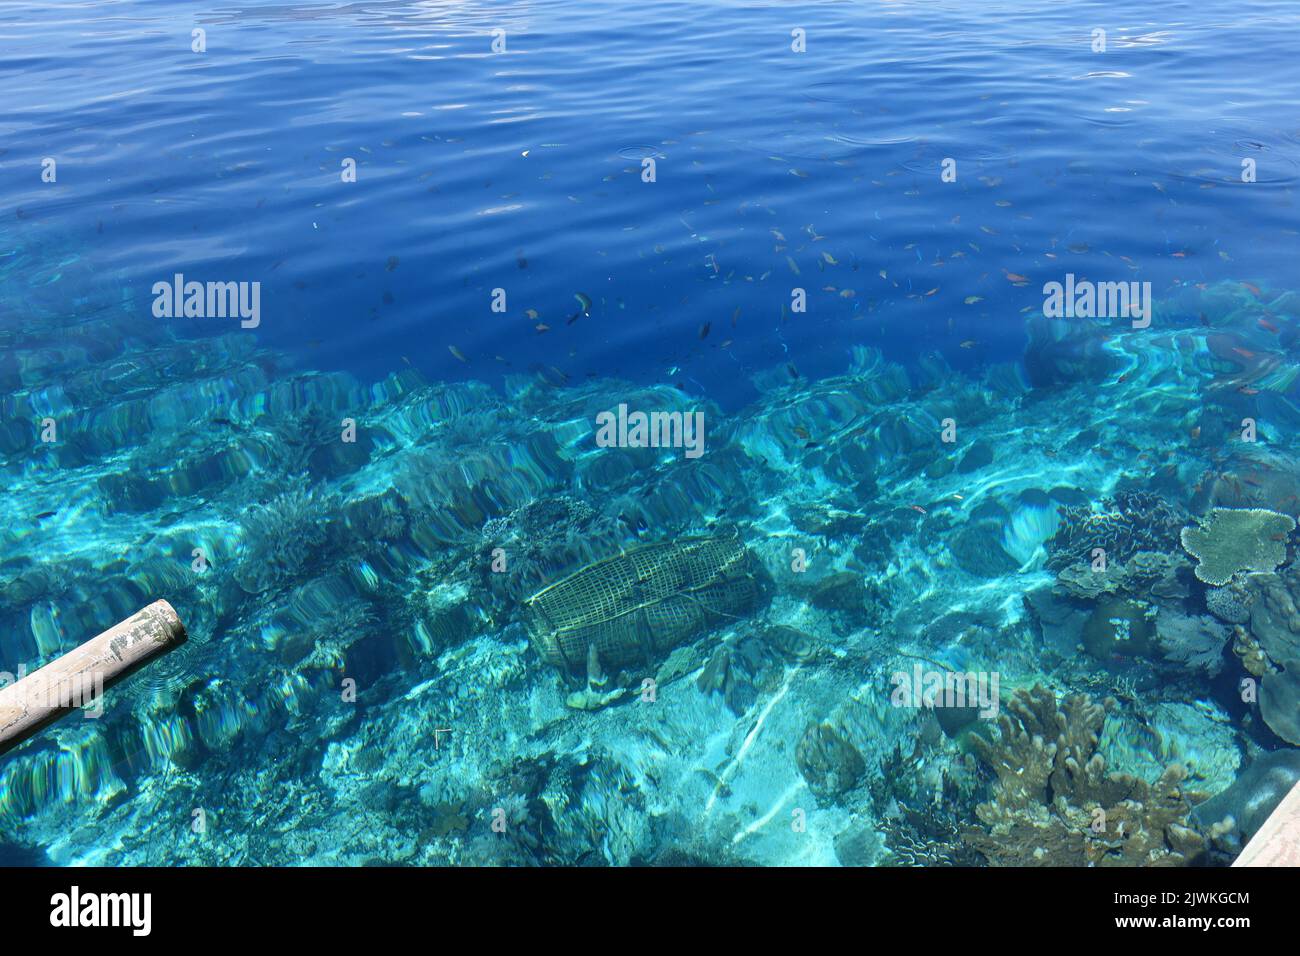 Indonesia Alor Island - Reef edge with fish trap Stock Photo